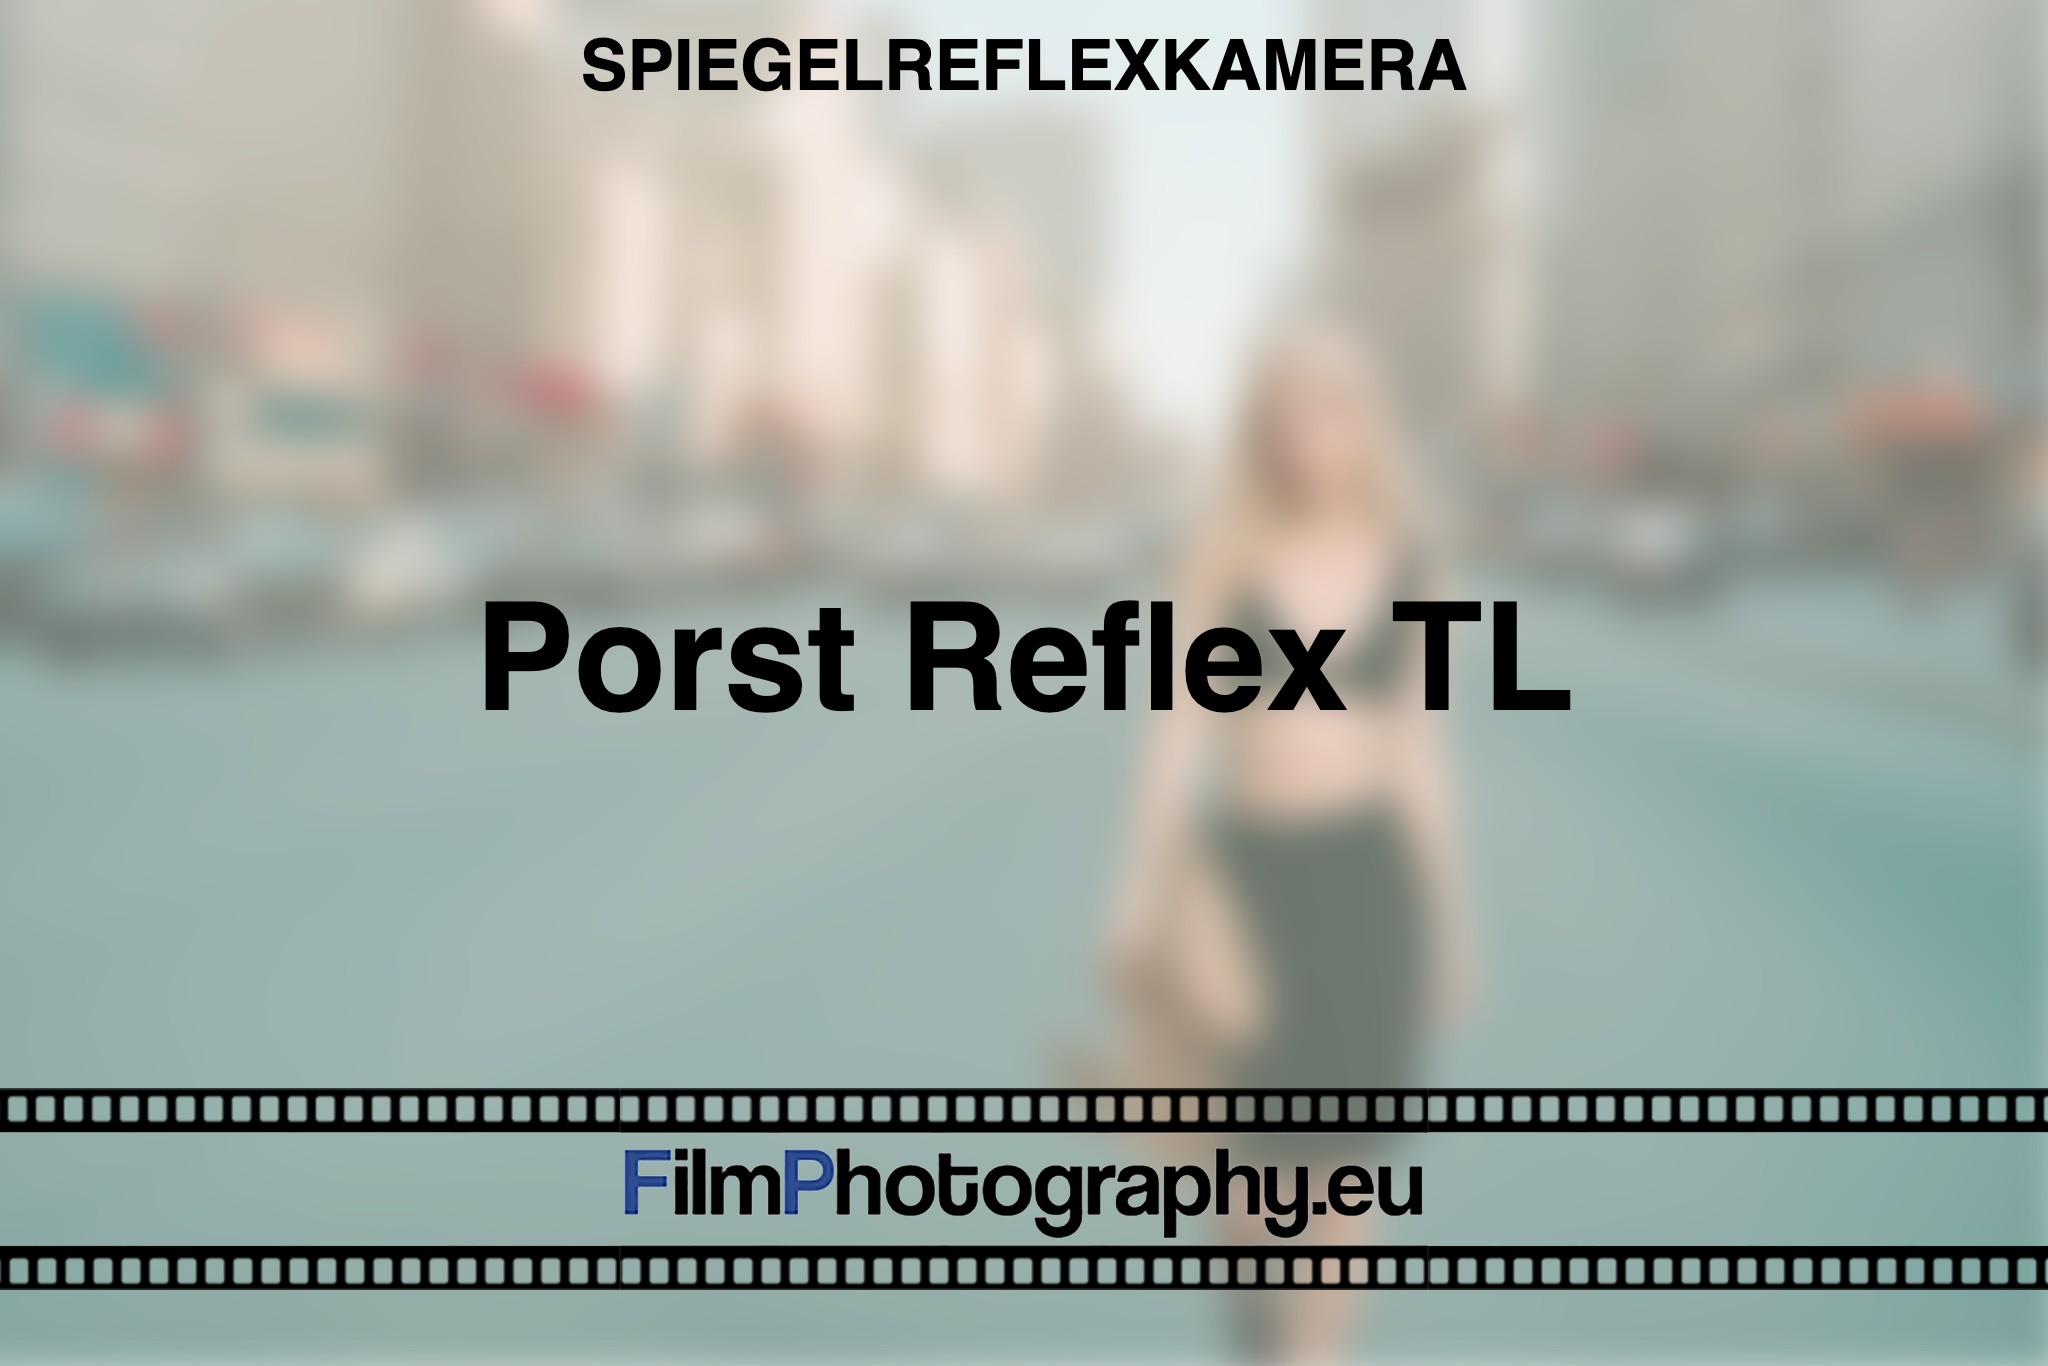 porst-reflex-tl-spiegelreflexkamera-bnv